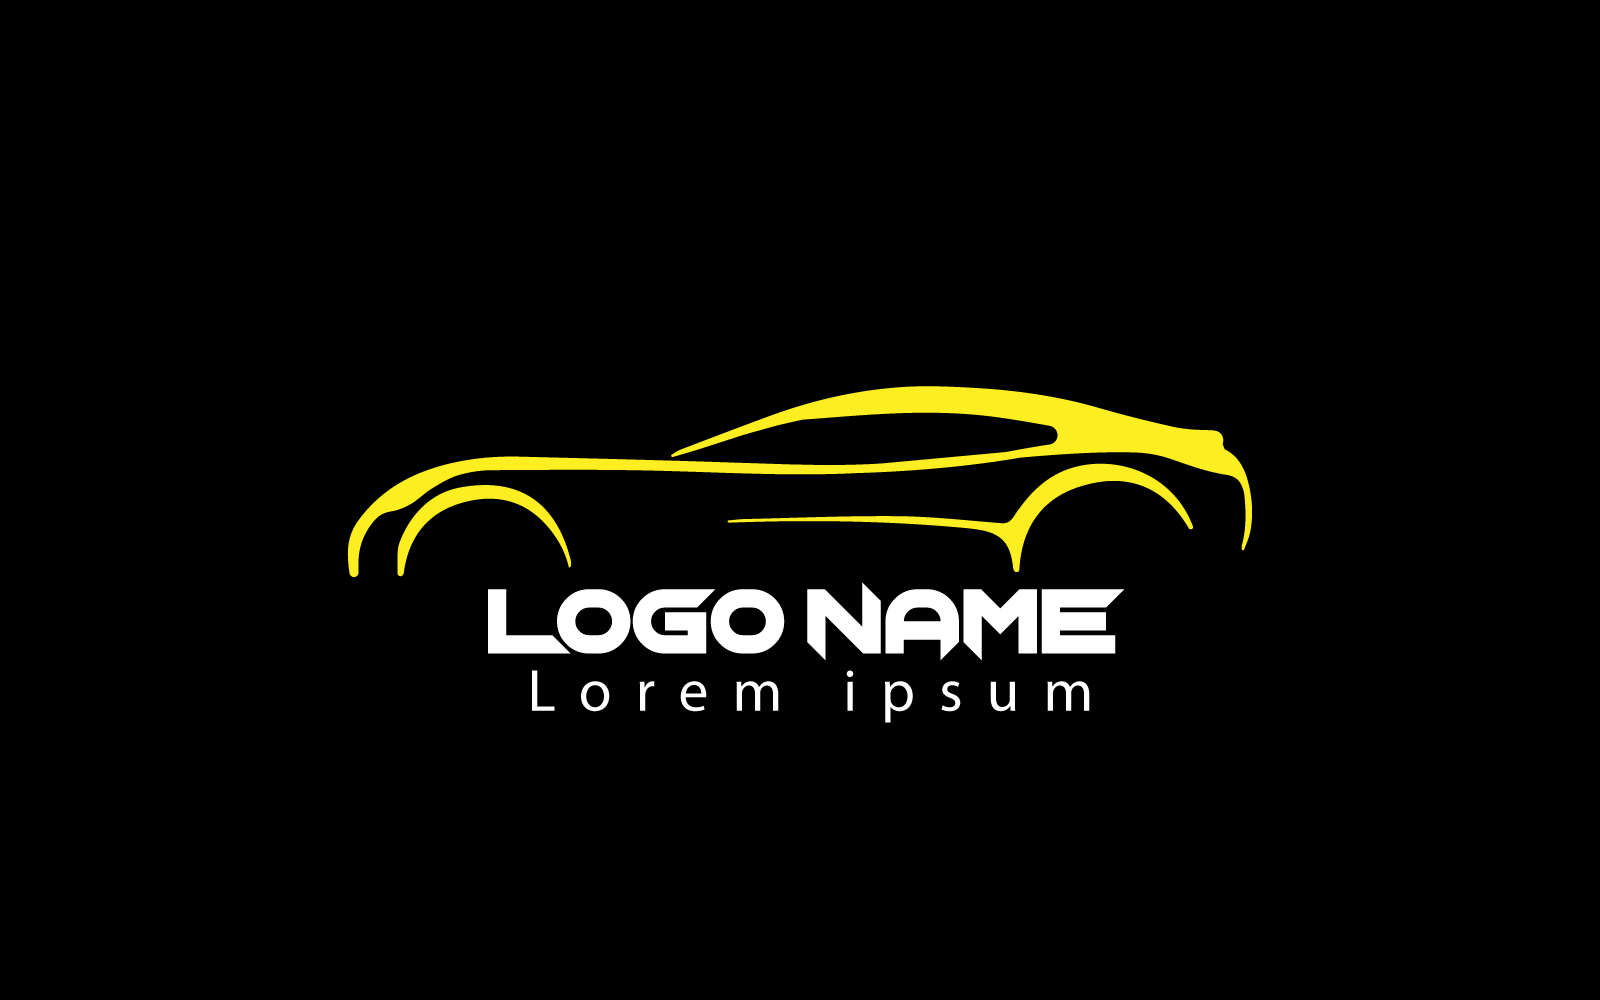 Professional Auto Detailing Logo